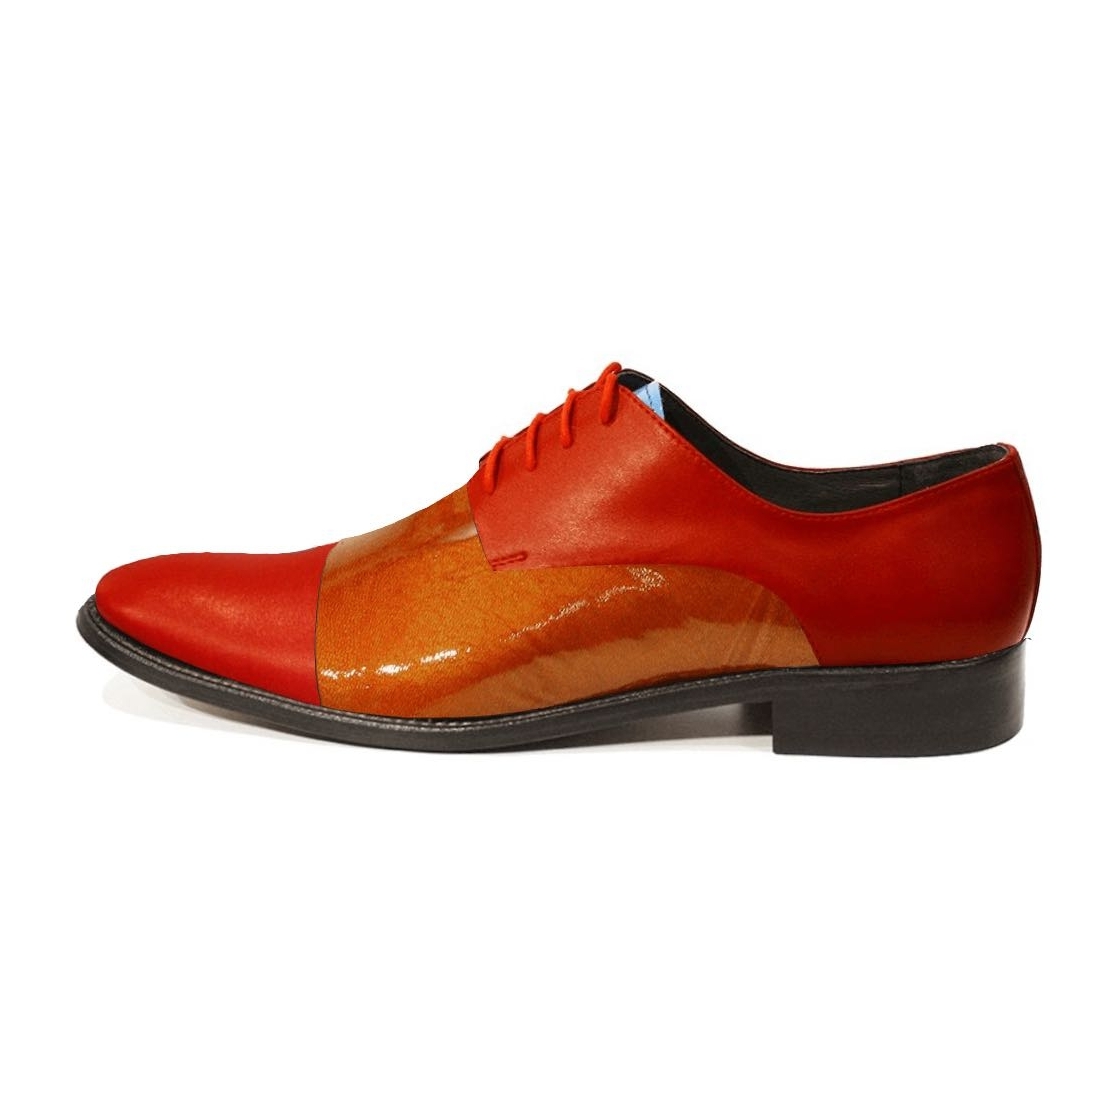 Modello Teterro - Zapatos Clásicos - Handmade Colorful Italian Leather Shoes